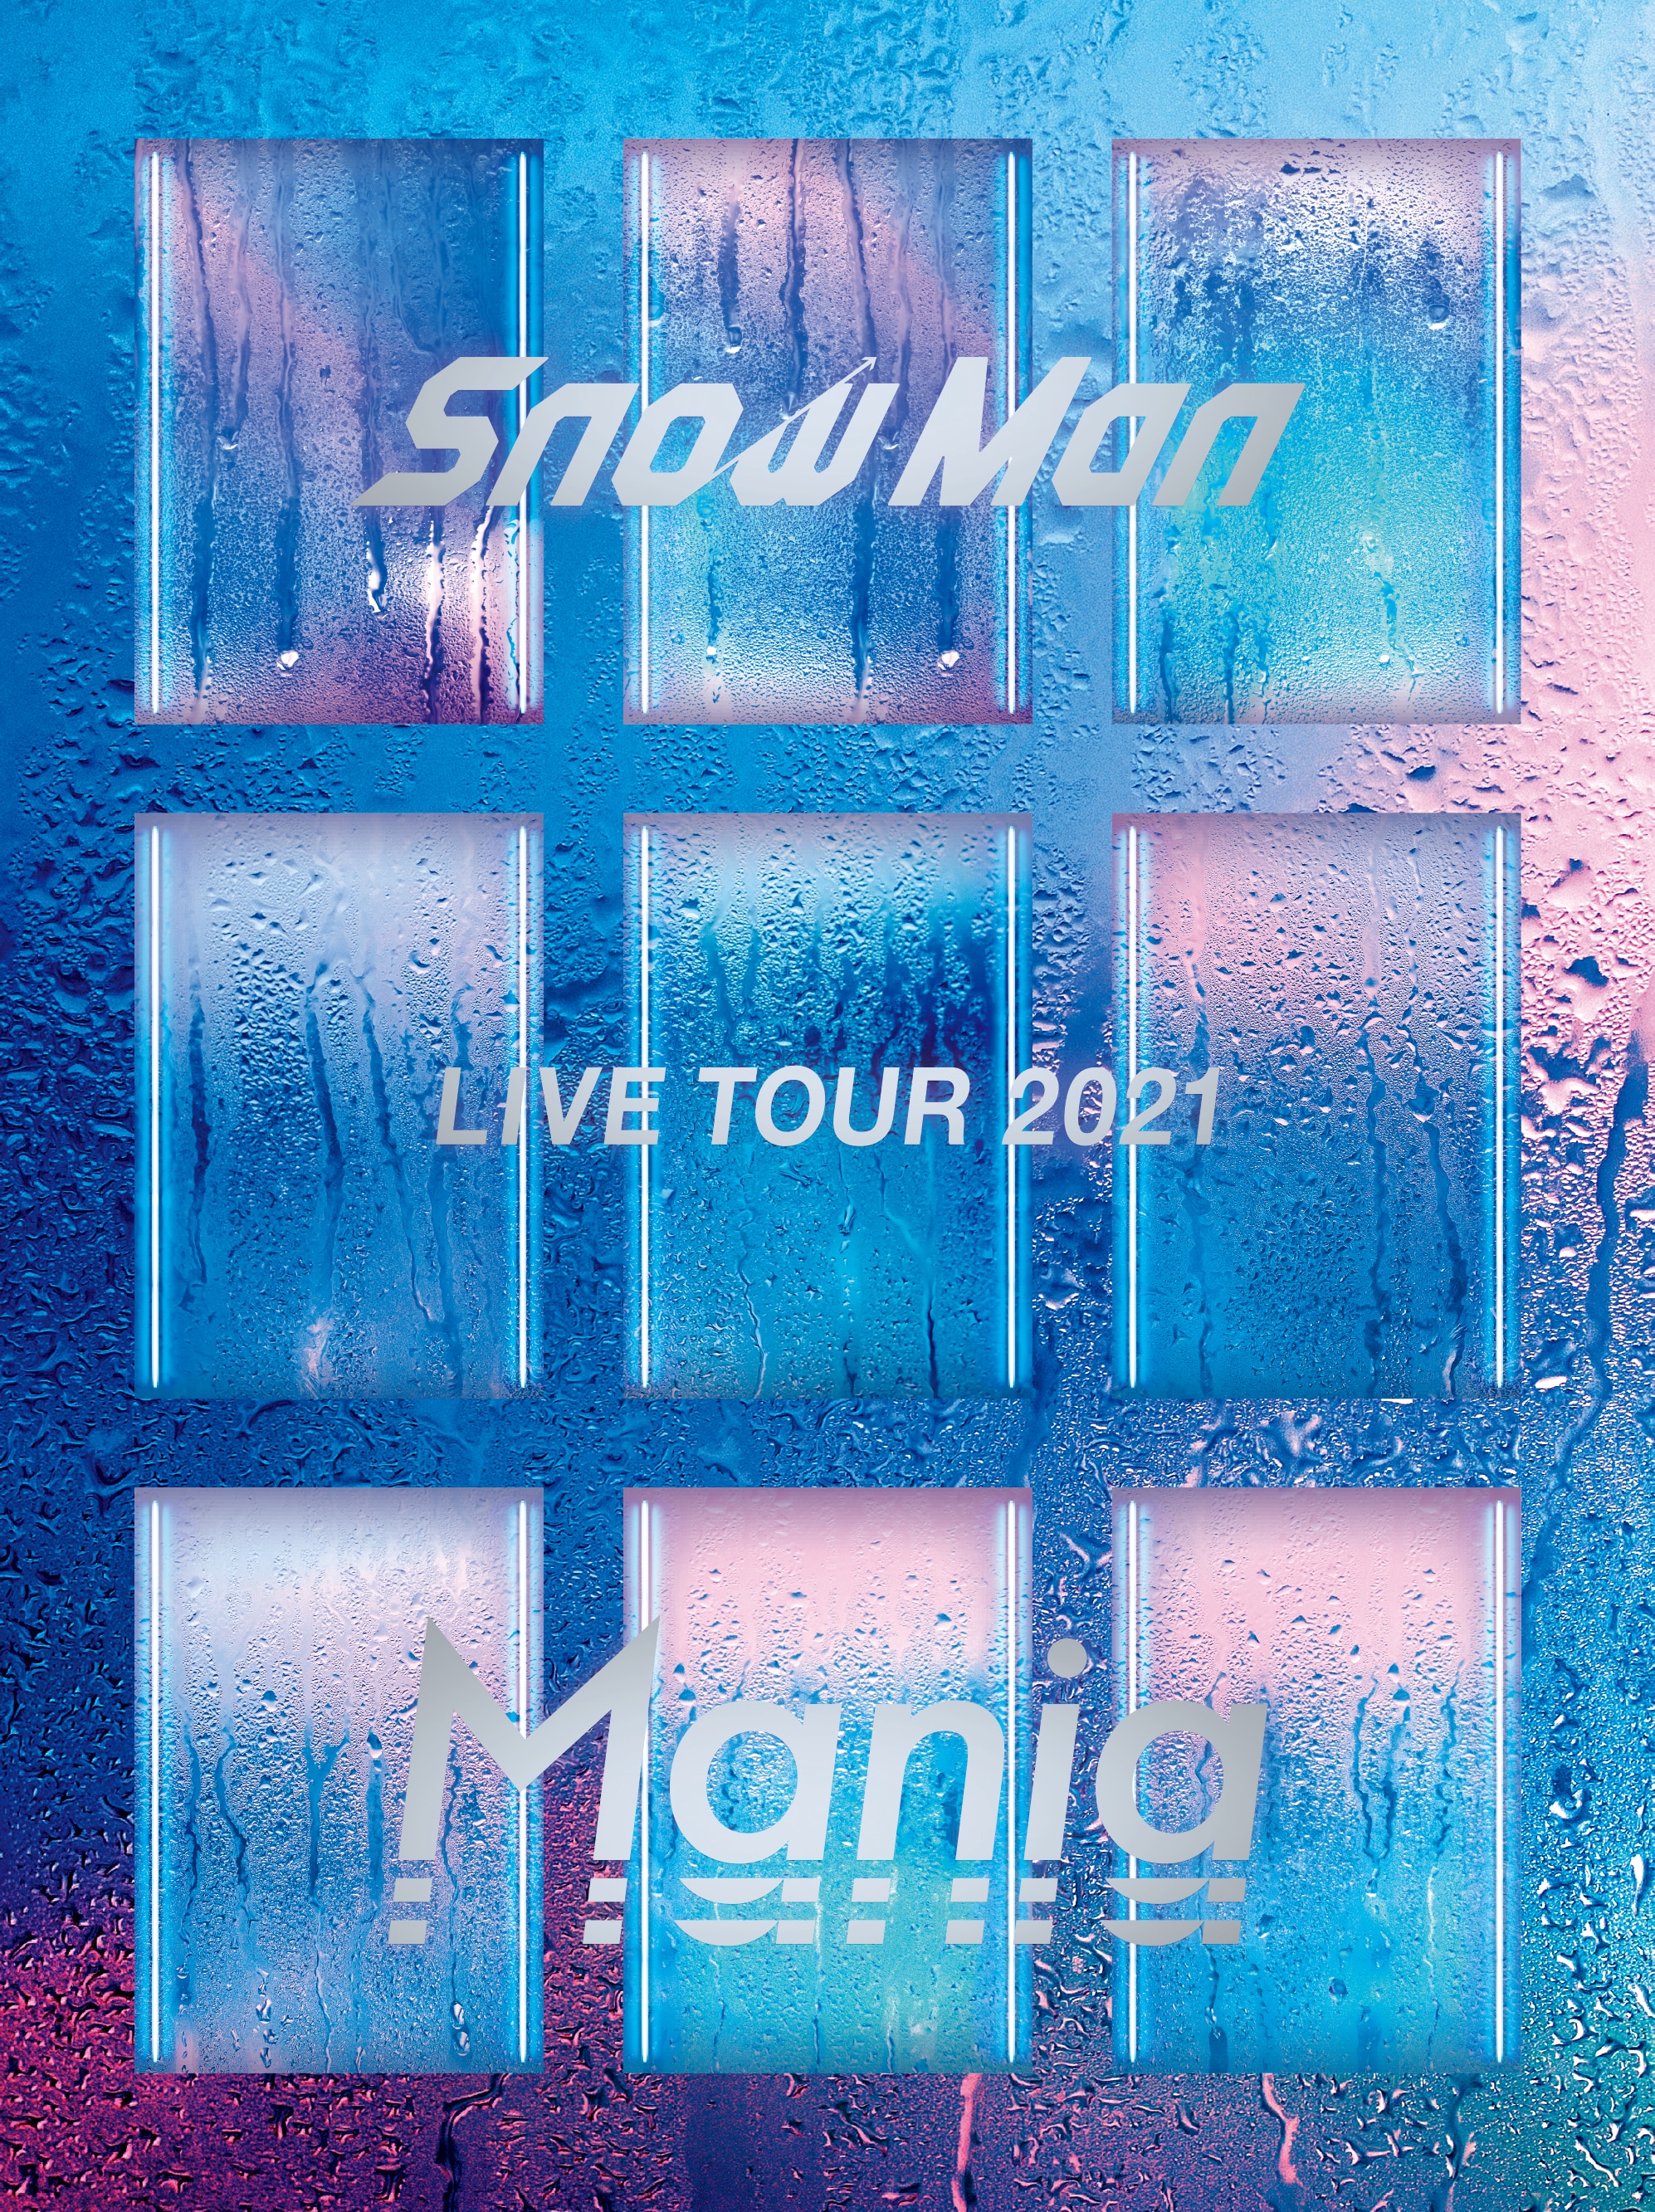 年中無休】 Snow Man LIVE TOUR 2021 Mania 初回盤 drenriquejmariani.com